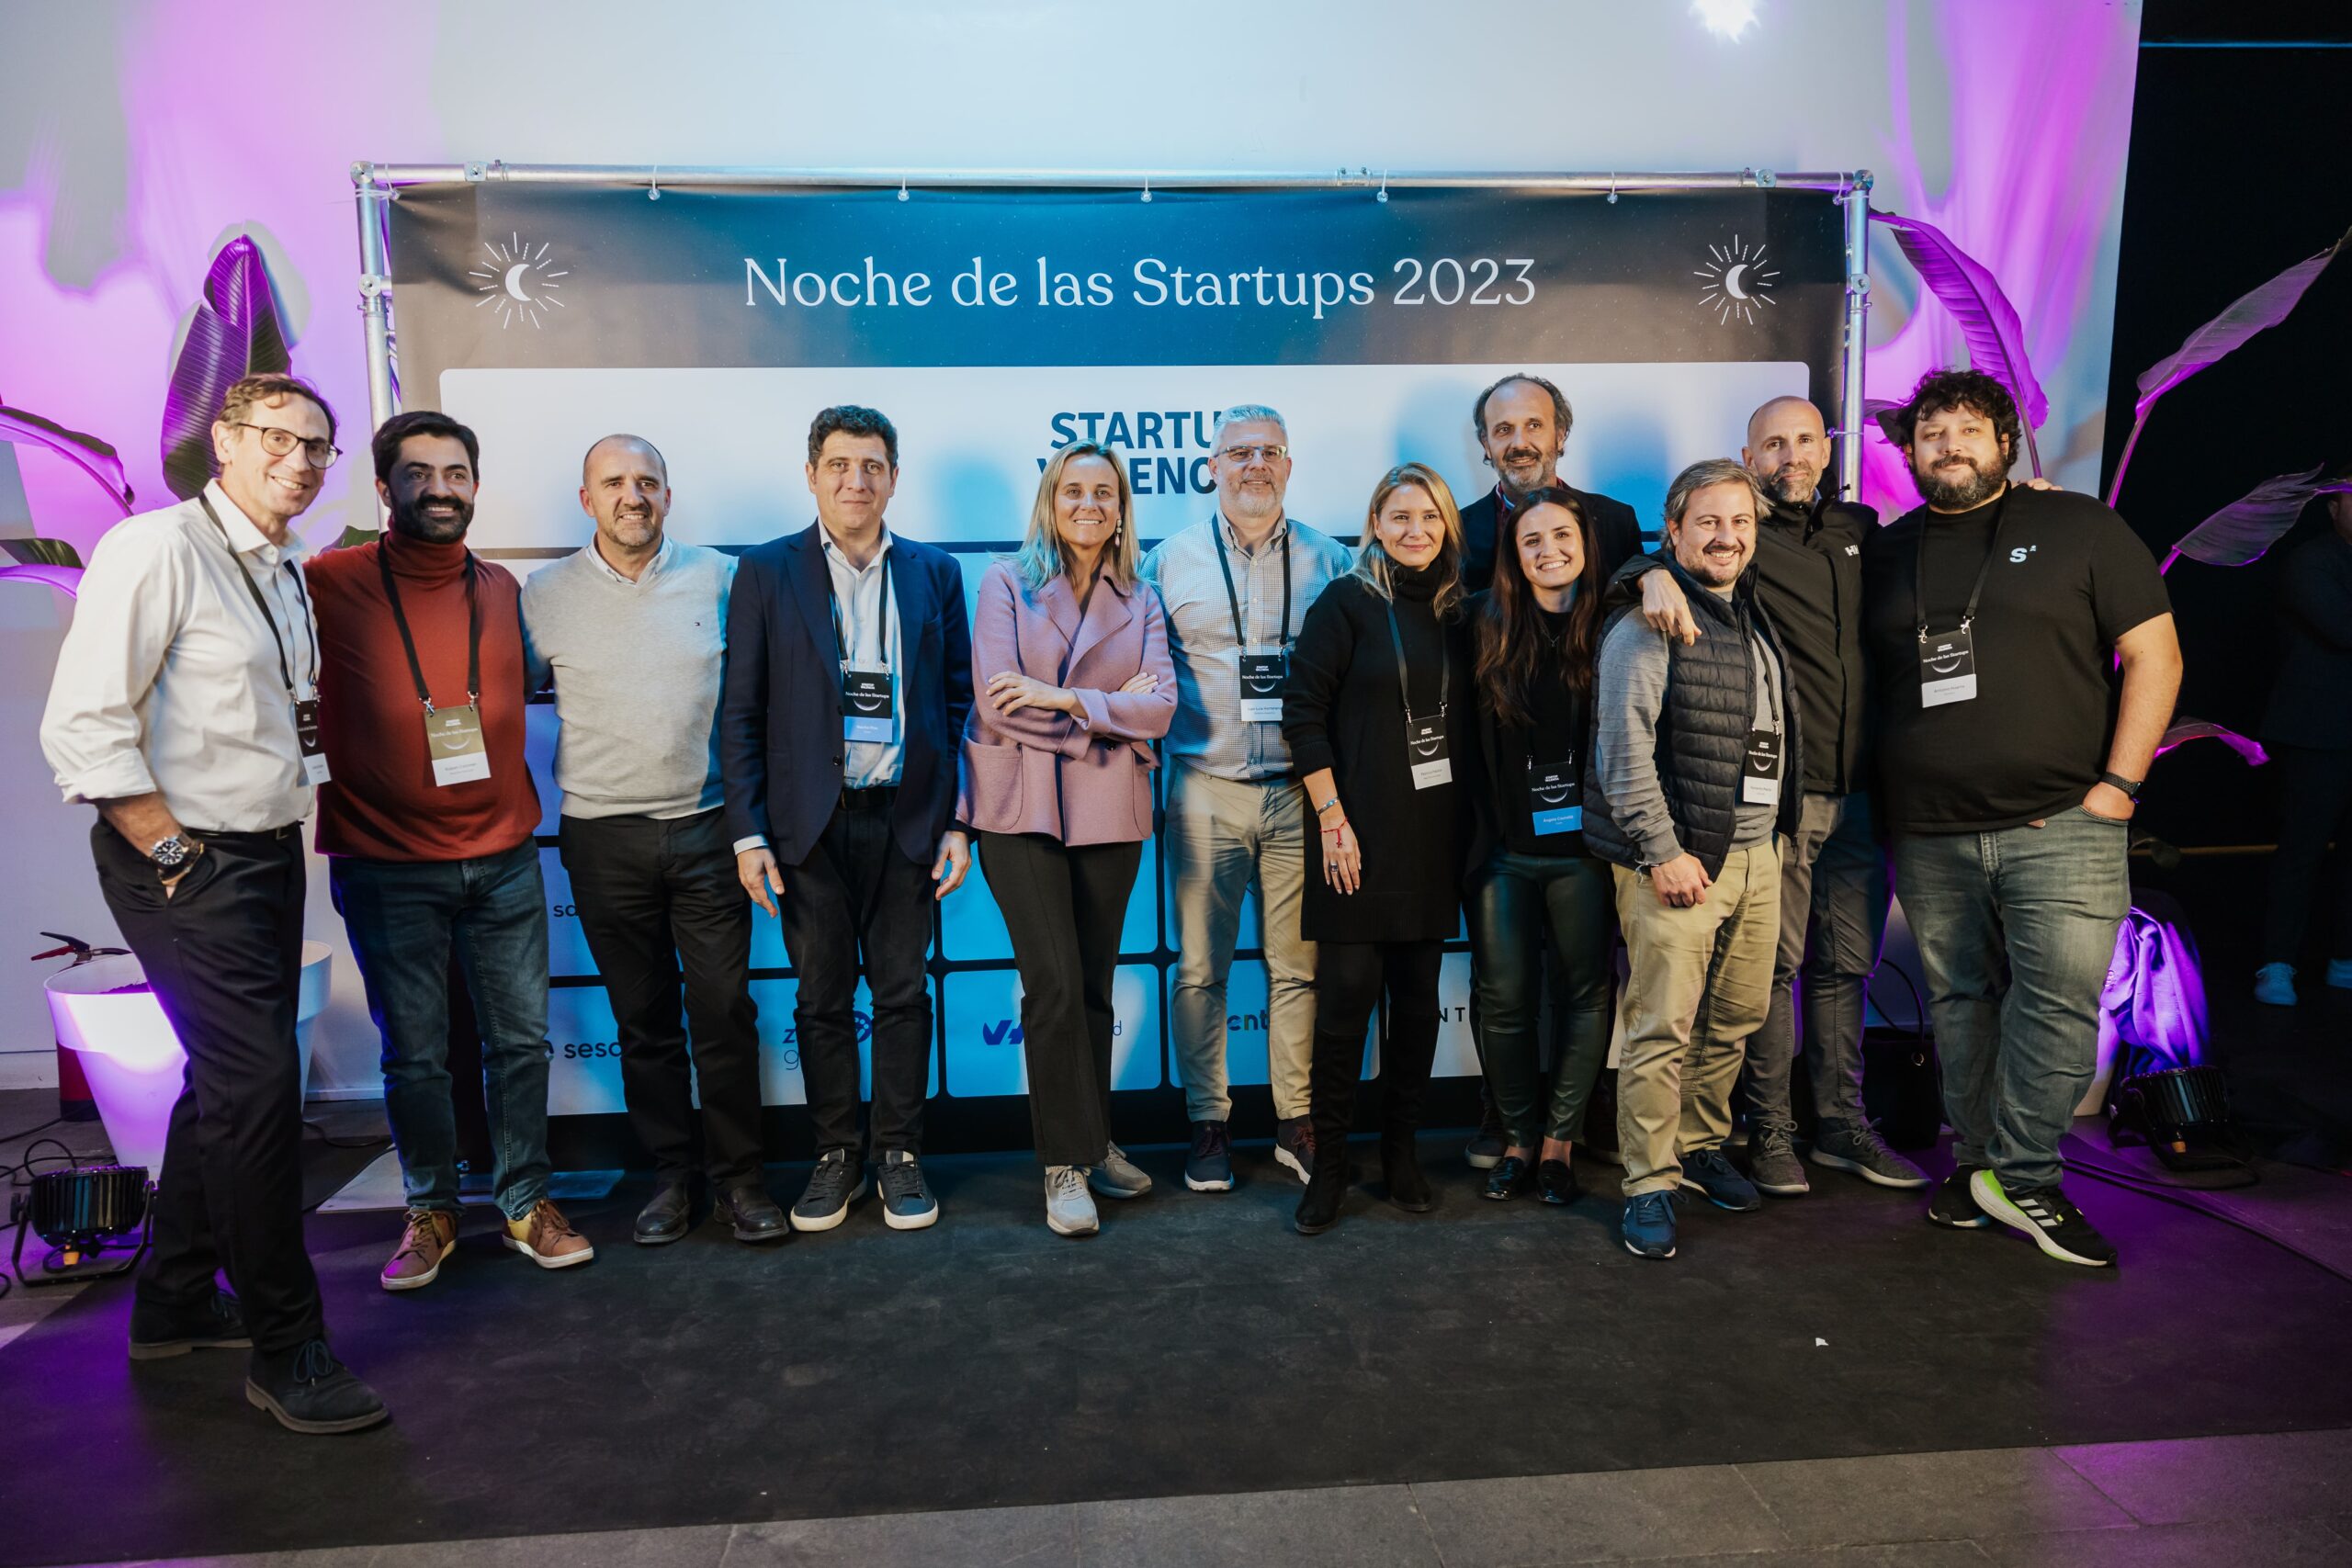 The Night of Startups